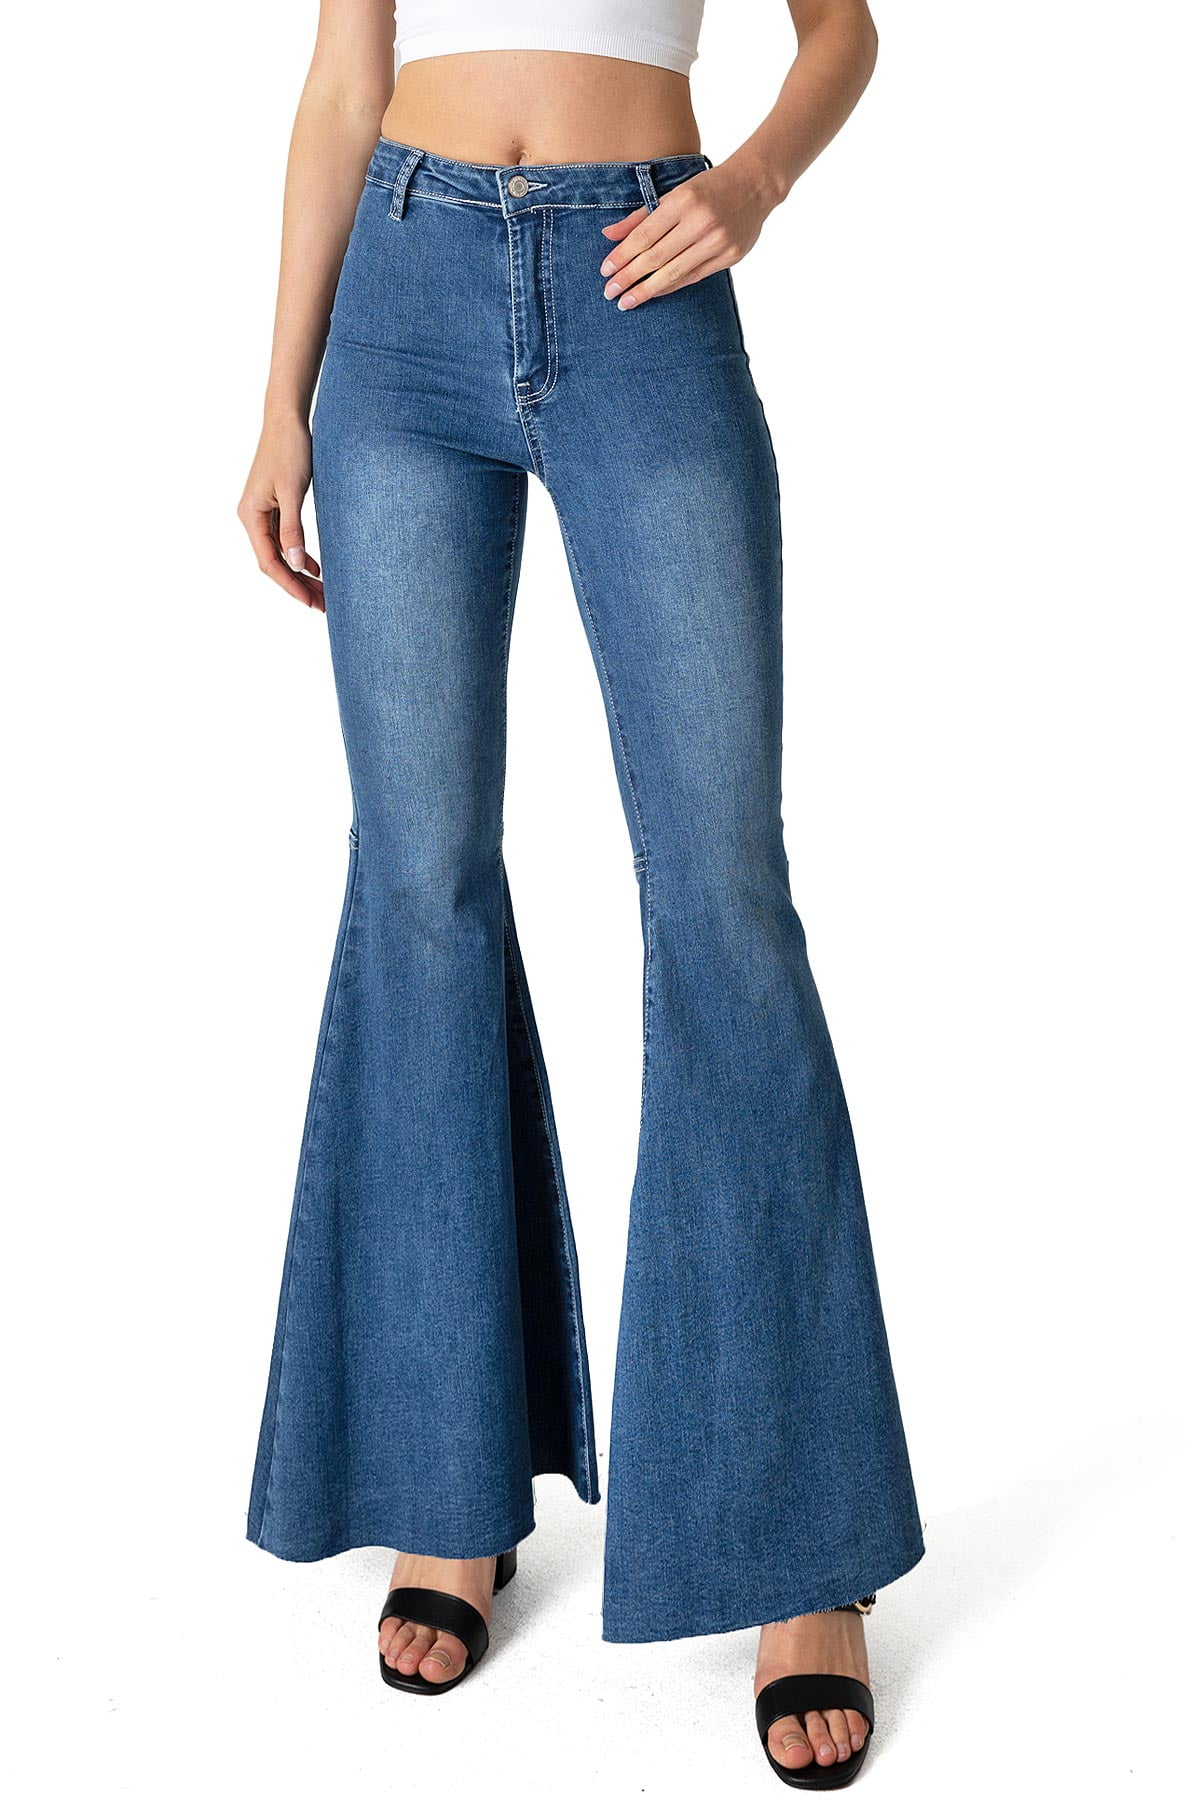 Tricot Womens High Rise Super Flare Bell Bottom Jeans (9, Medium Denim)